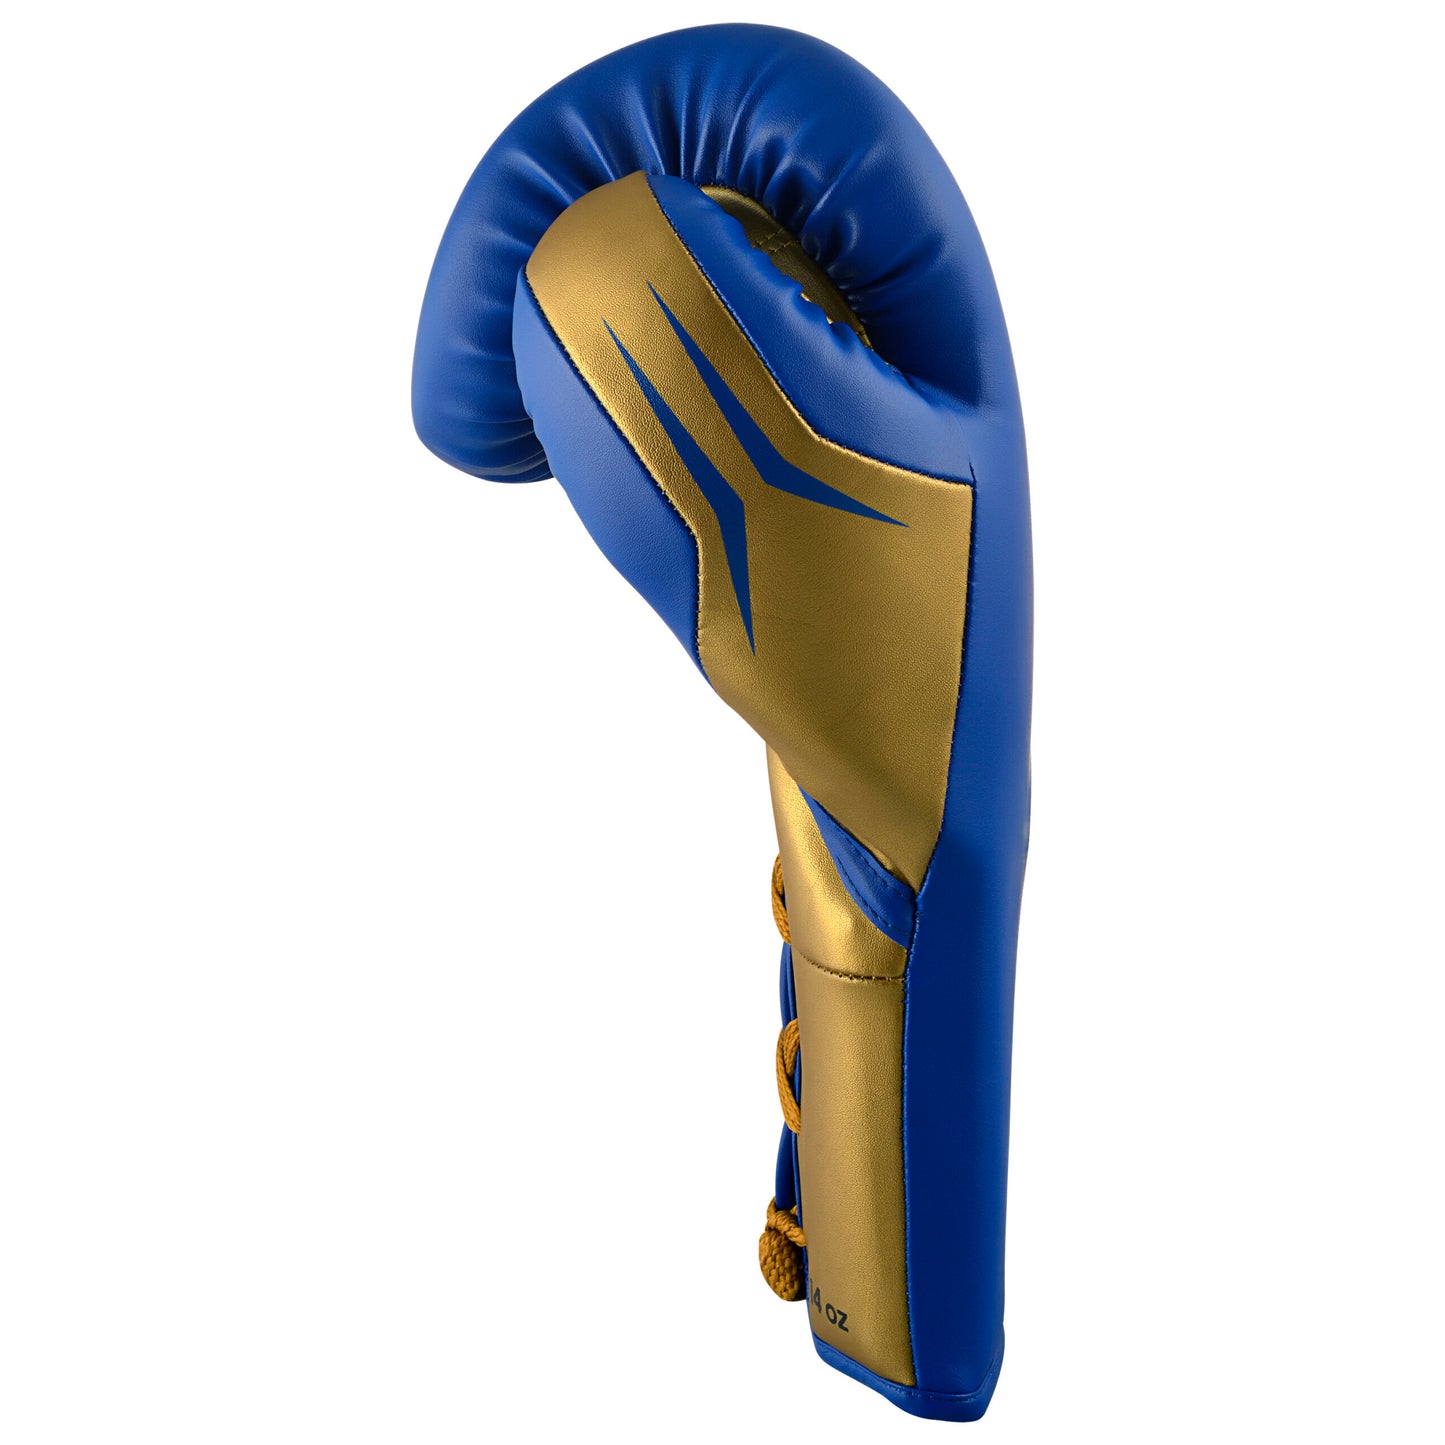 Adispd350tg Adidas Tilt 350 Pro Training Boxing Gloves Blue Gold 04